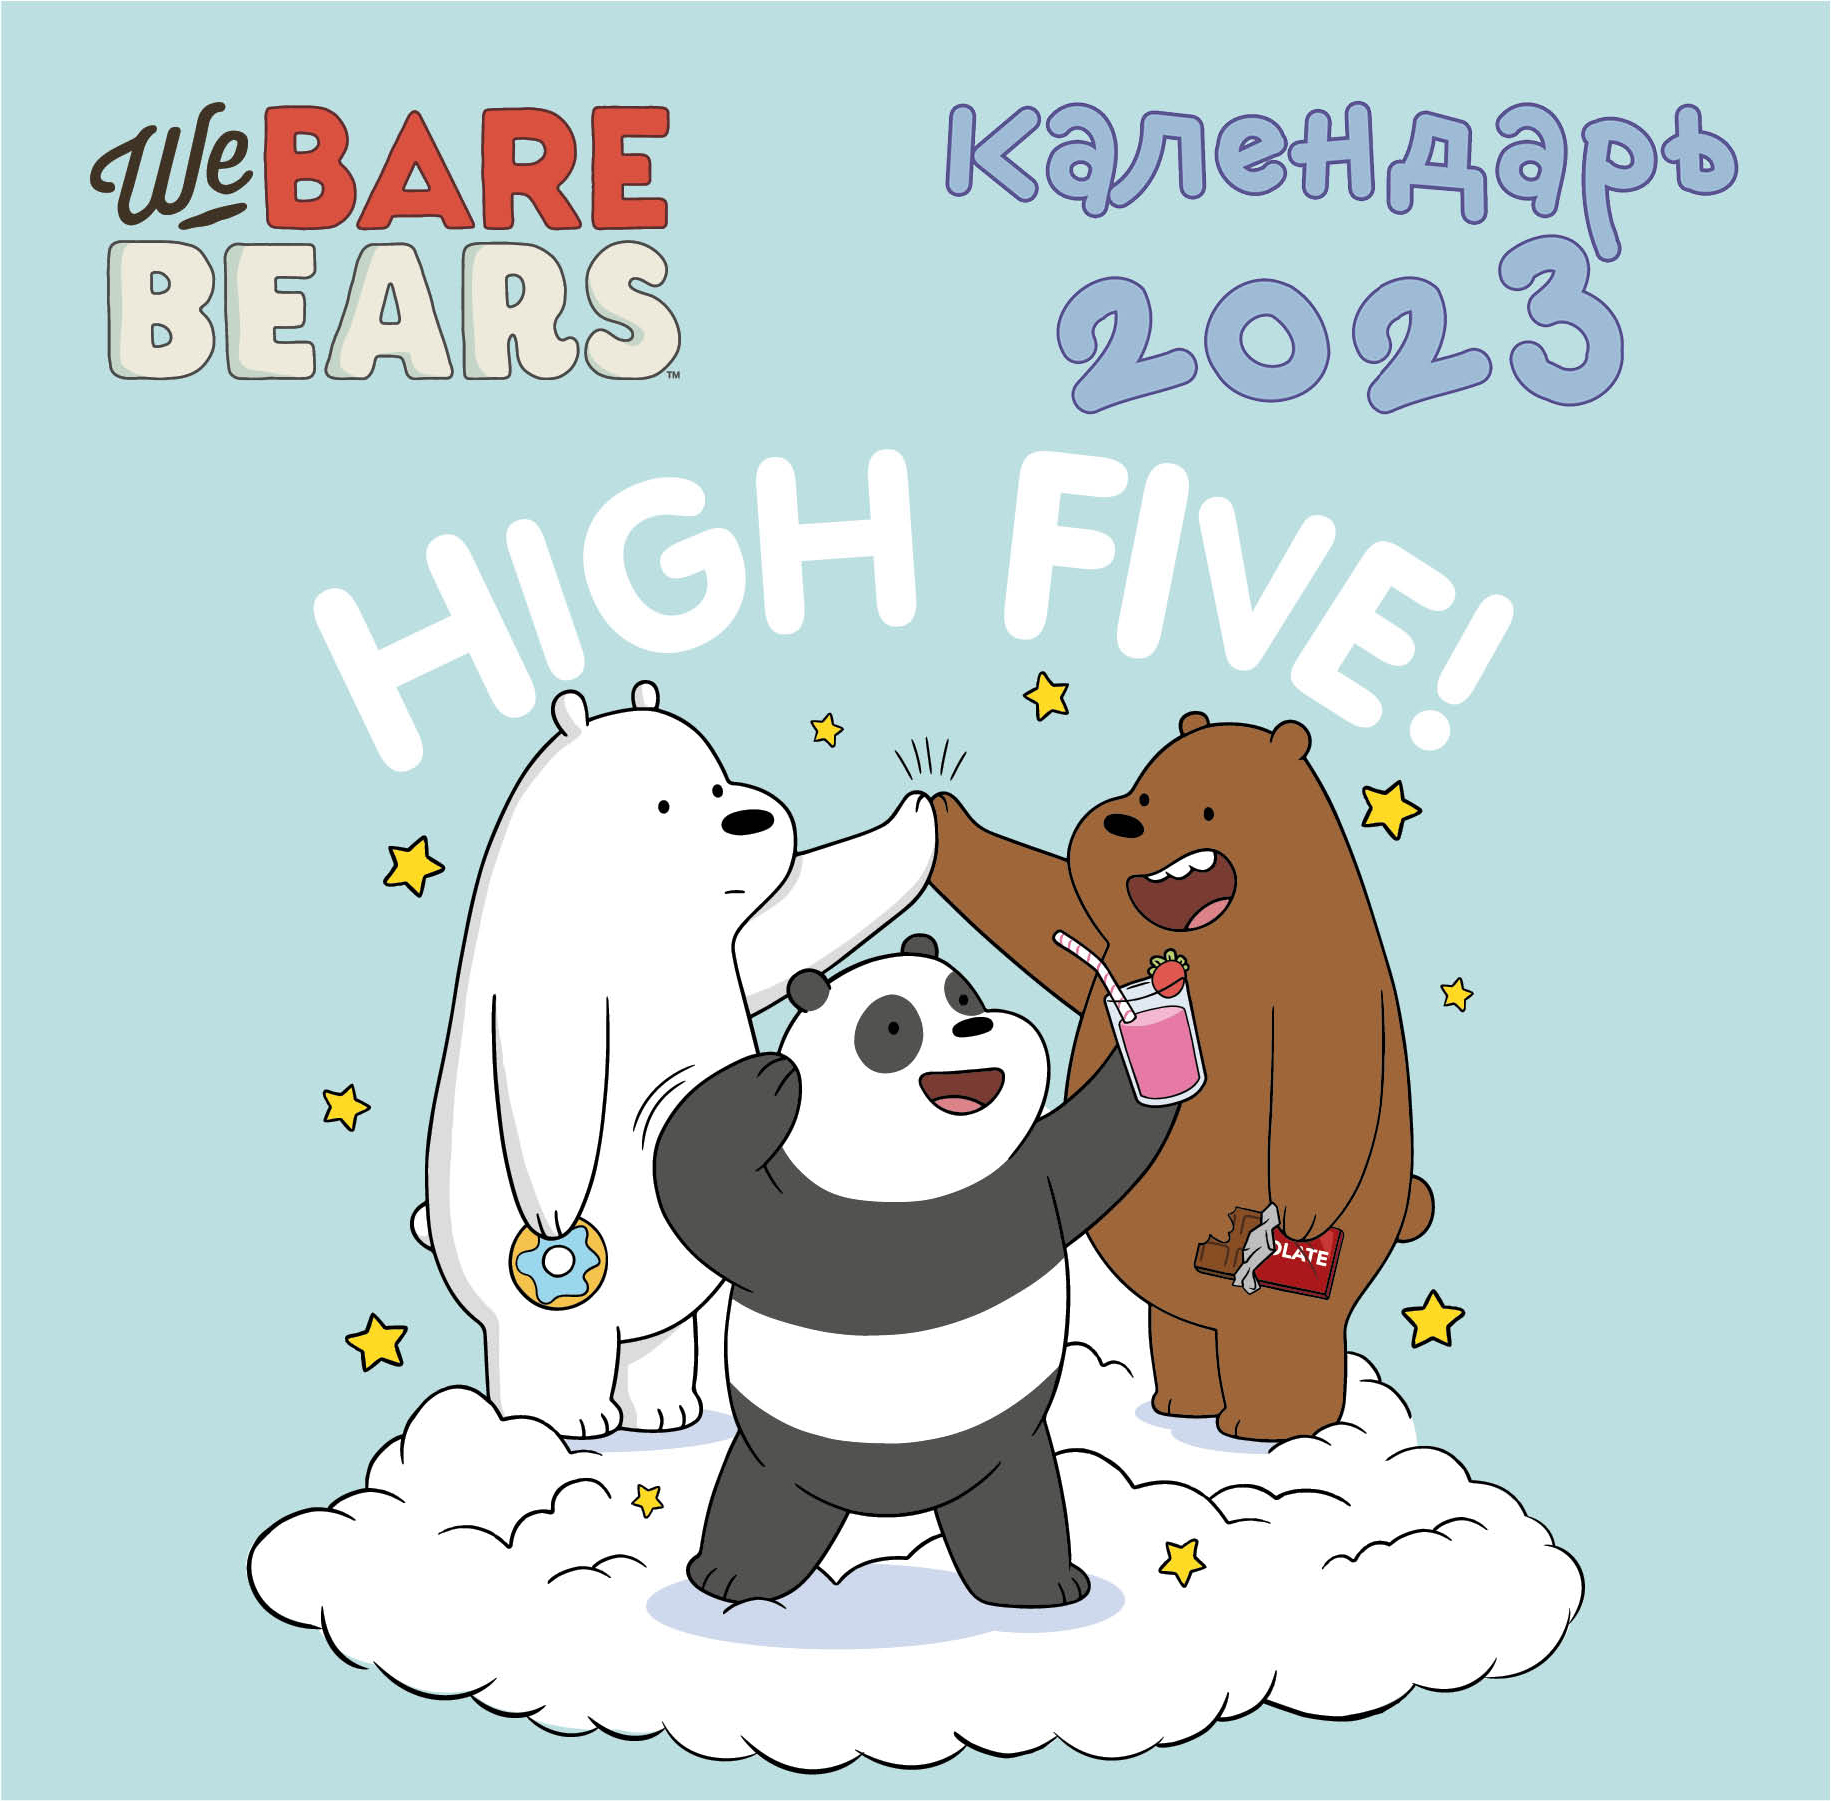 We bare bears.    2023  (300300 )